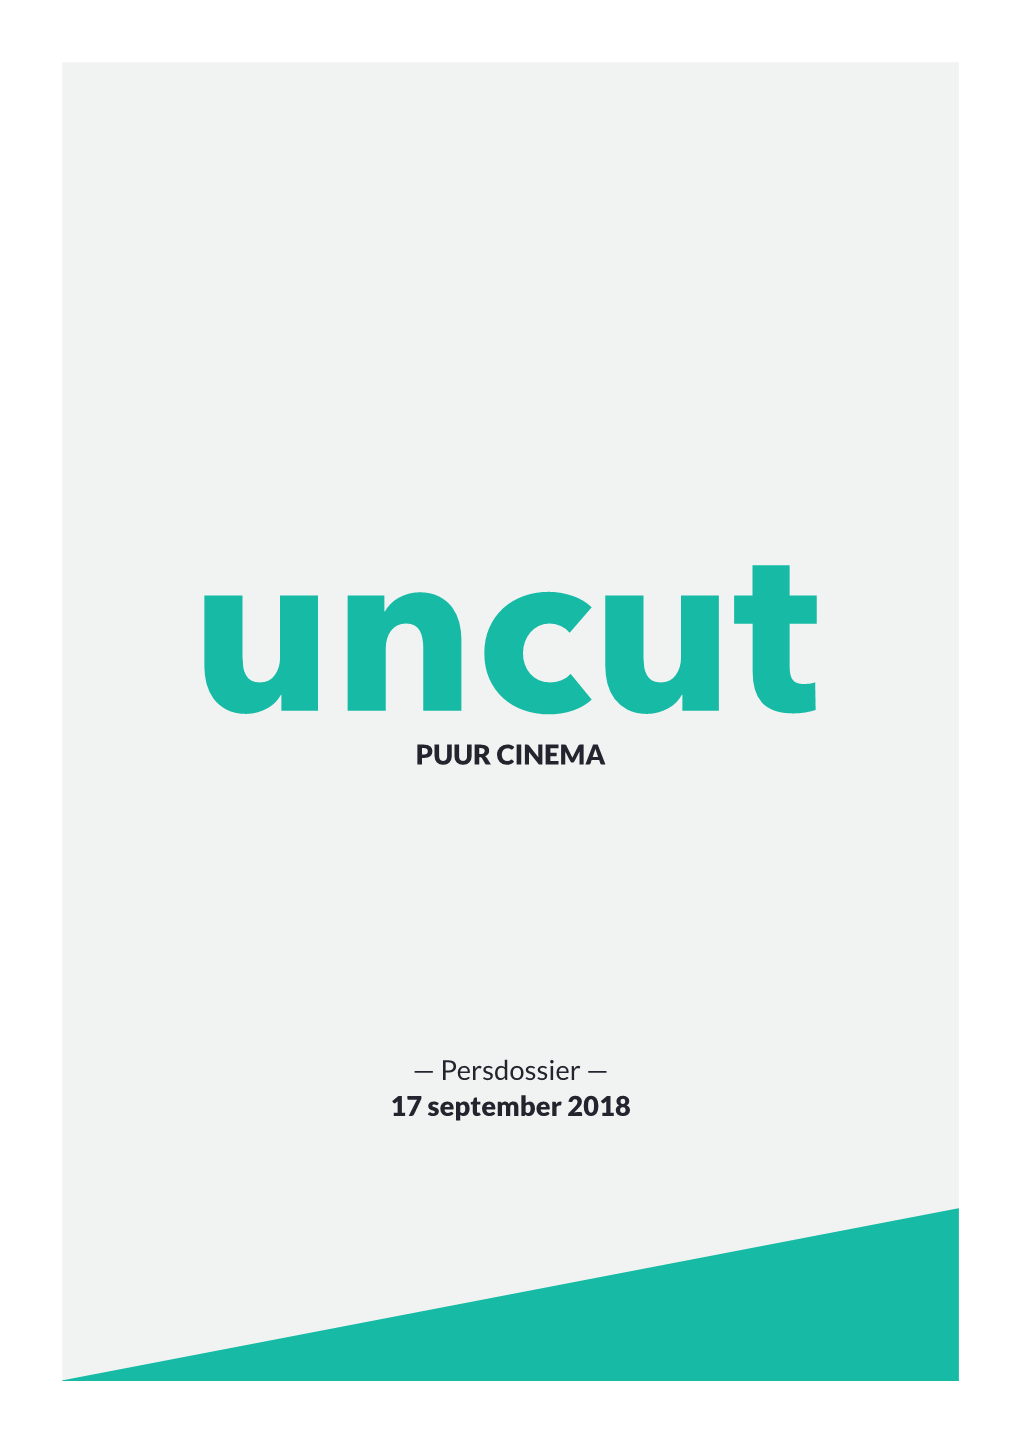 PUUR CINEMA — Persdossier — 17 September 2018